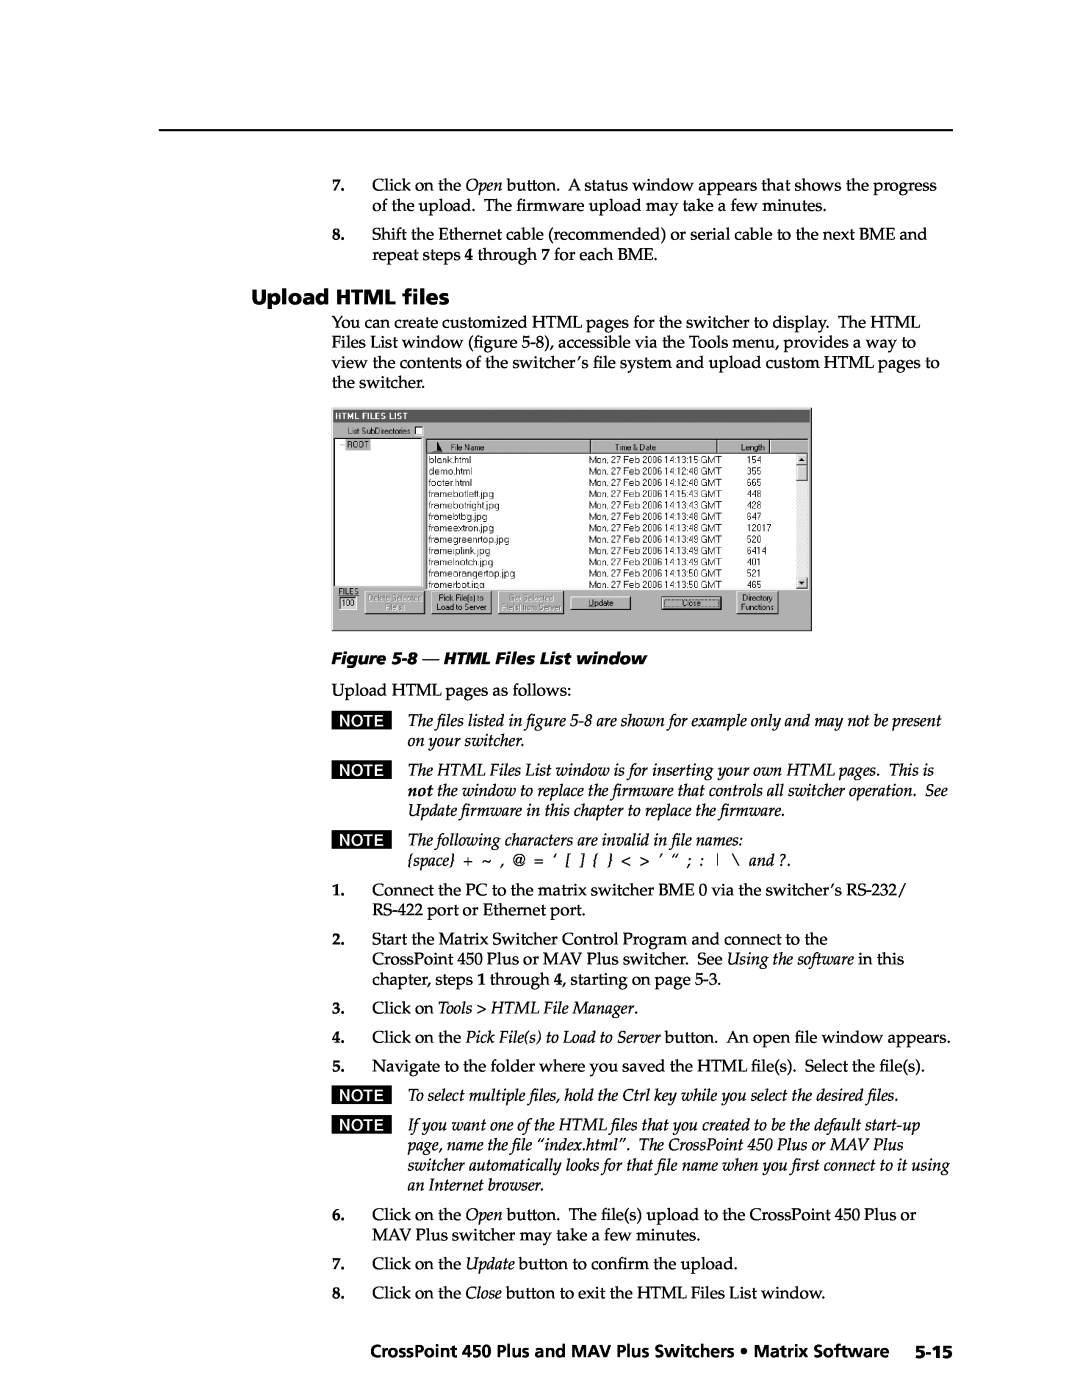 Extron electronic 450 Plus, MAV Plus manual Upload HTML ﬁles, 8 - HTML Files List window 